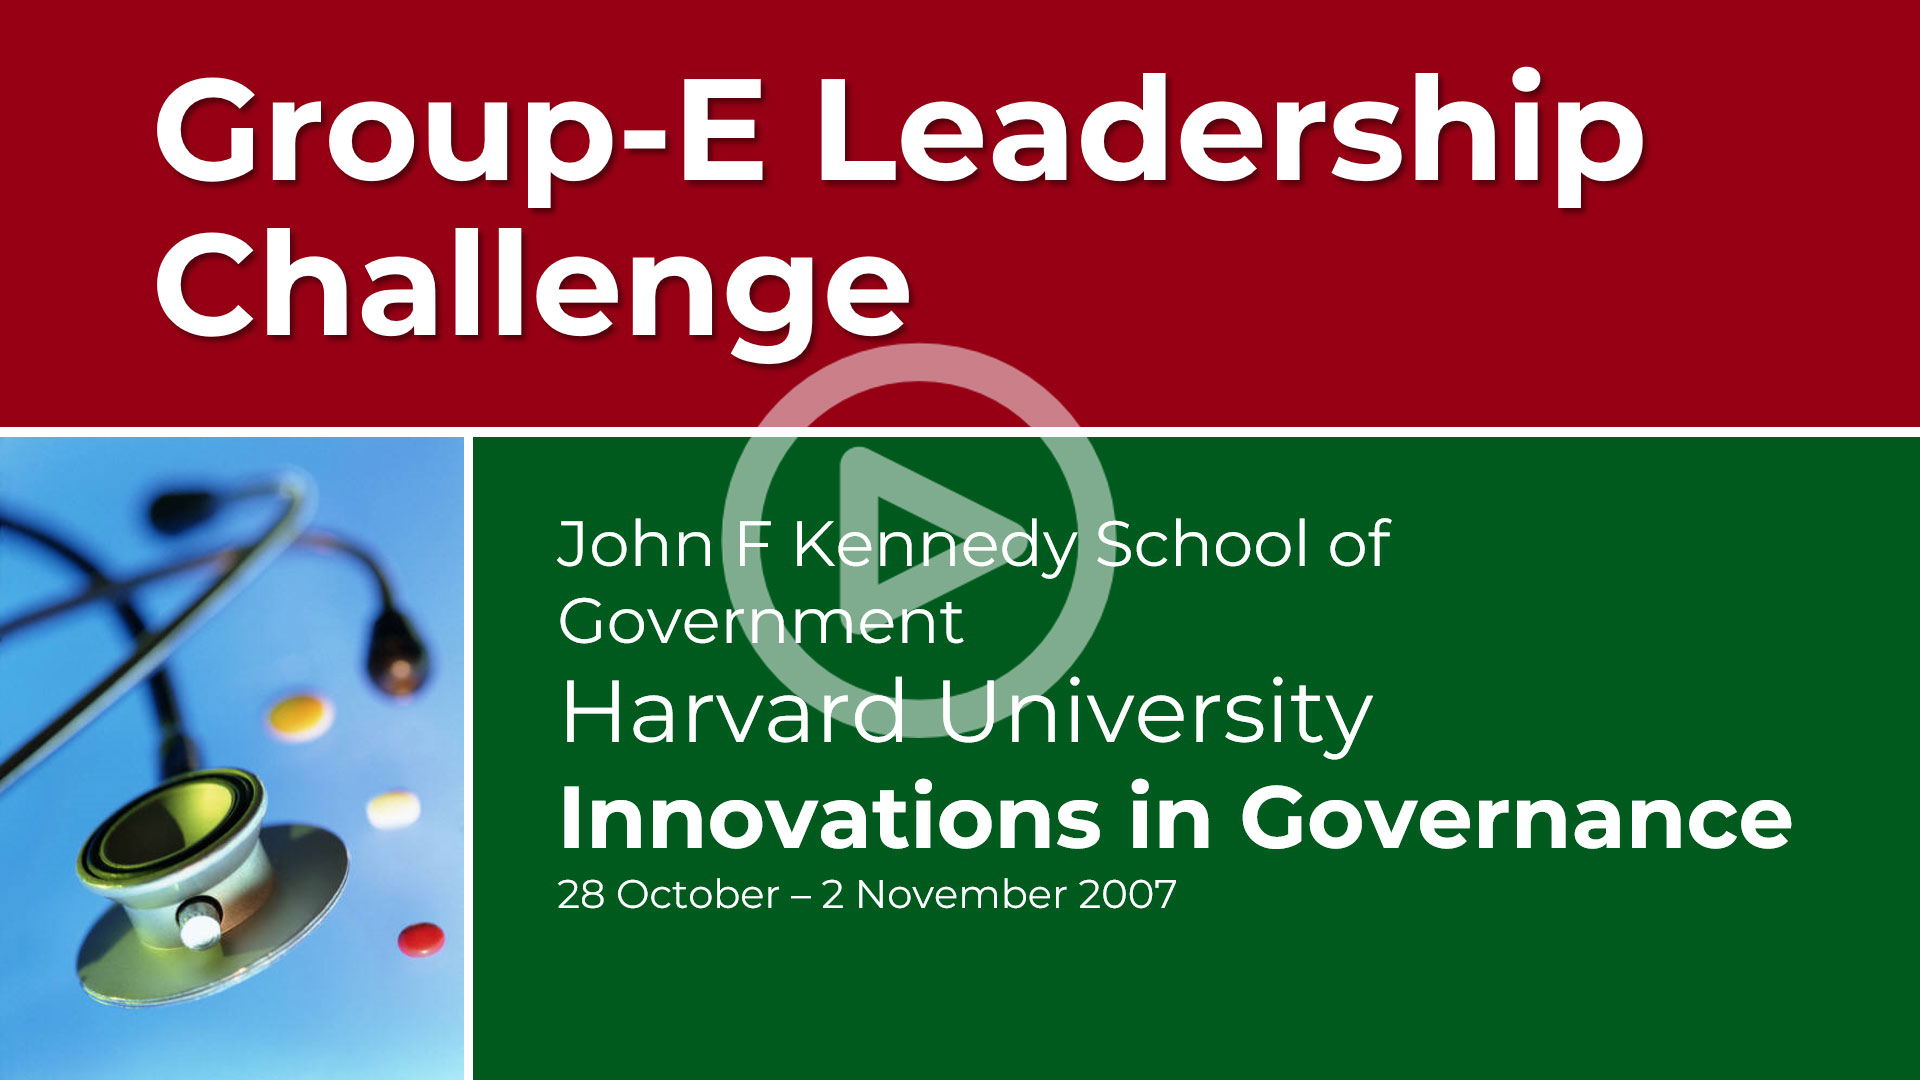 group e presentation on leadership challenge harvard university thumbnail